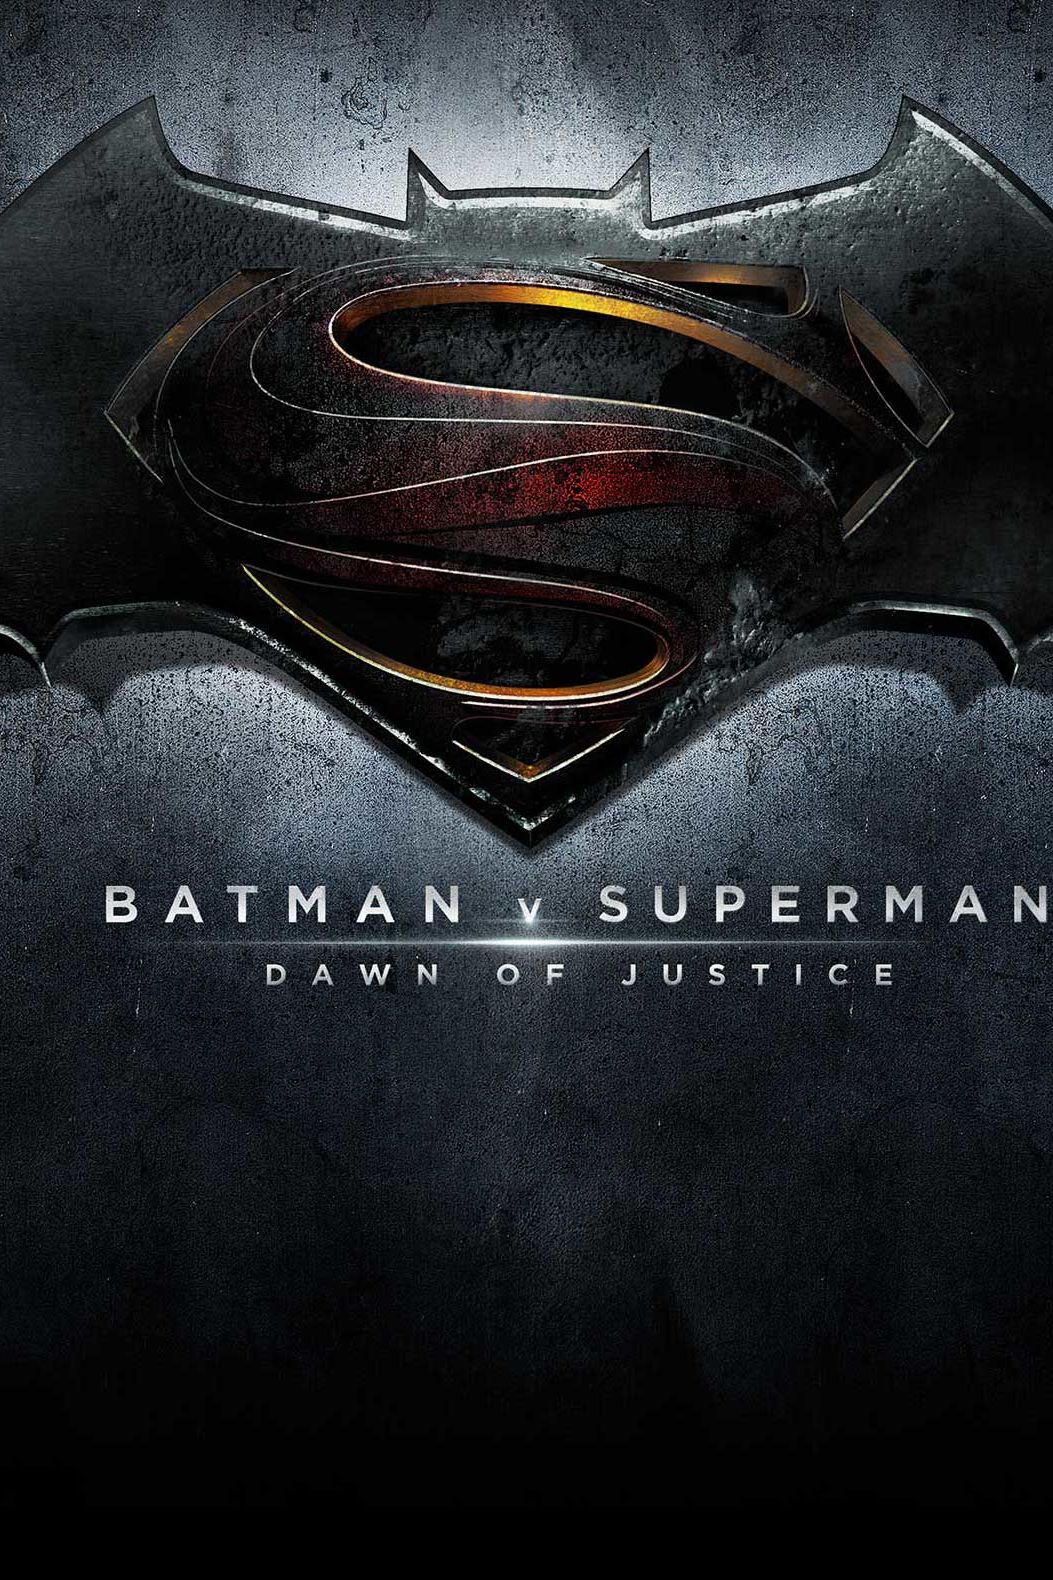 Batman v Superman's' official title: Who likes it? | CNN